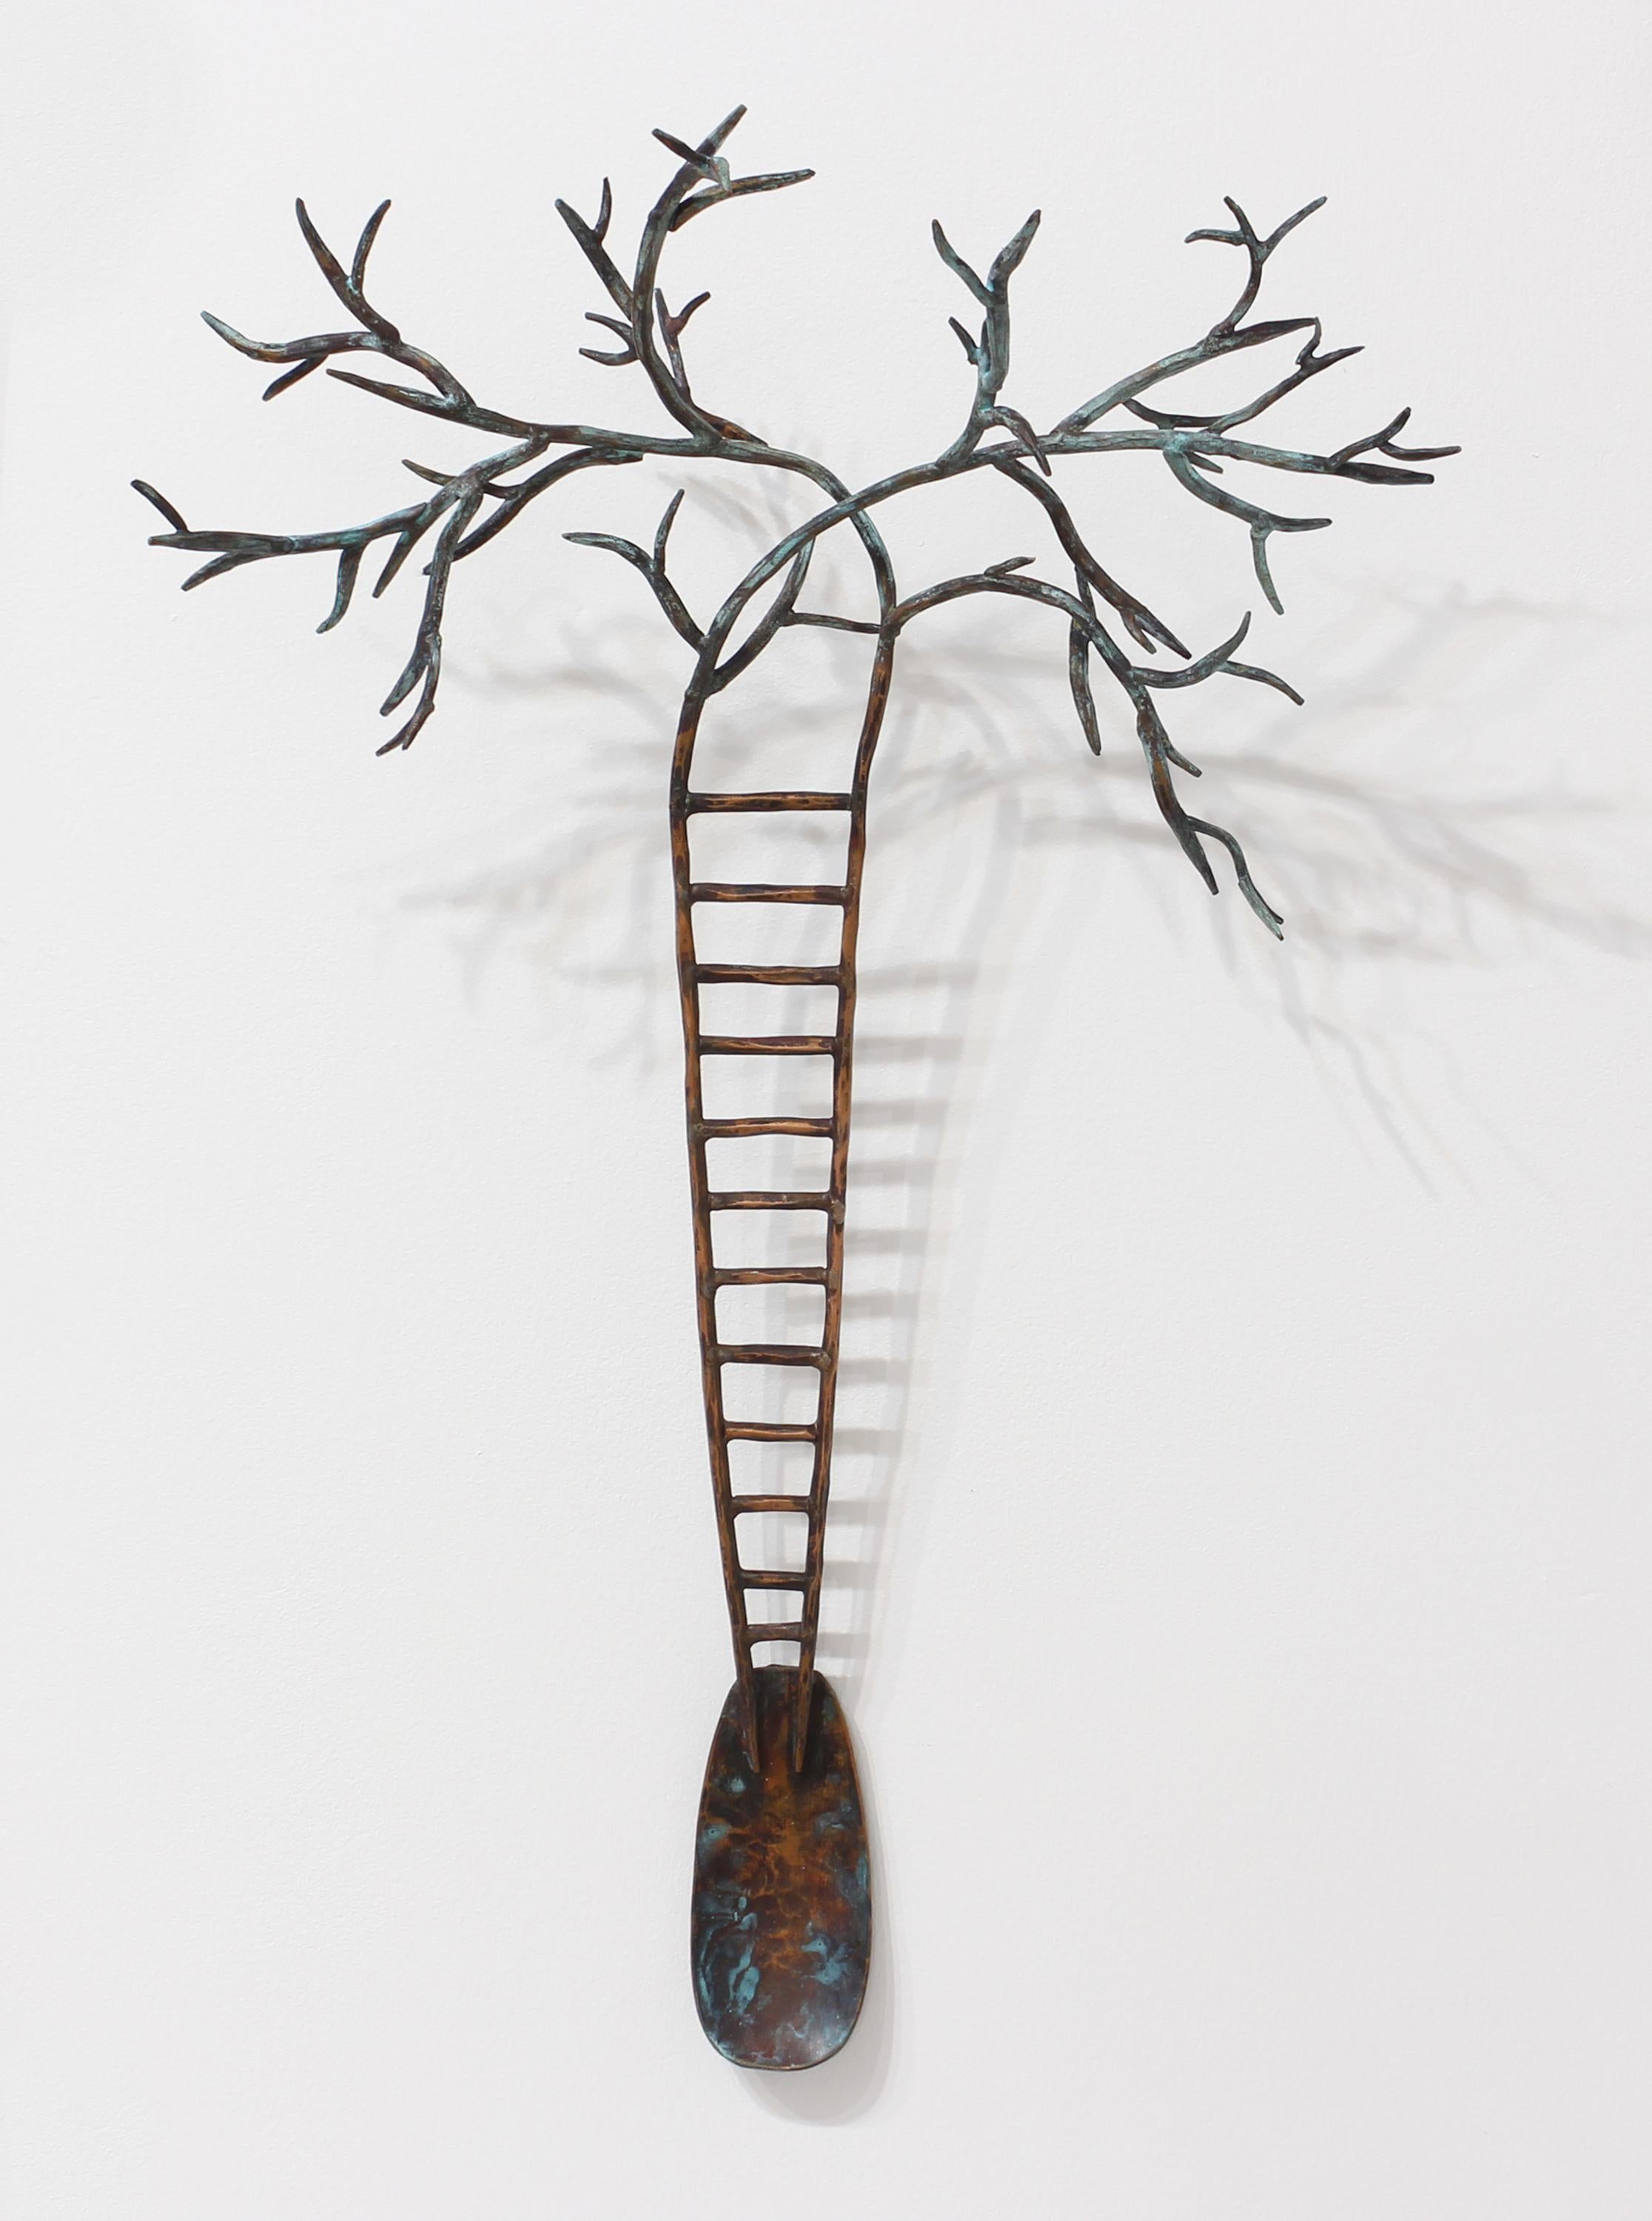 Corrina Sephora Still-Life Sculpture - "AVIRONS, À Travers la Forêt" - wall sculpture, tree, ladder, branches, metal